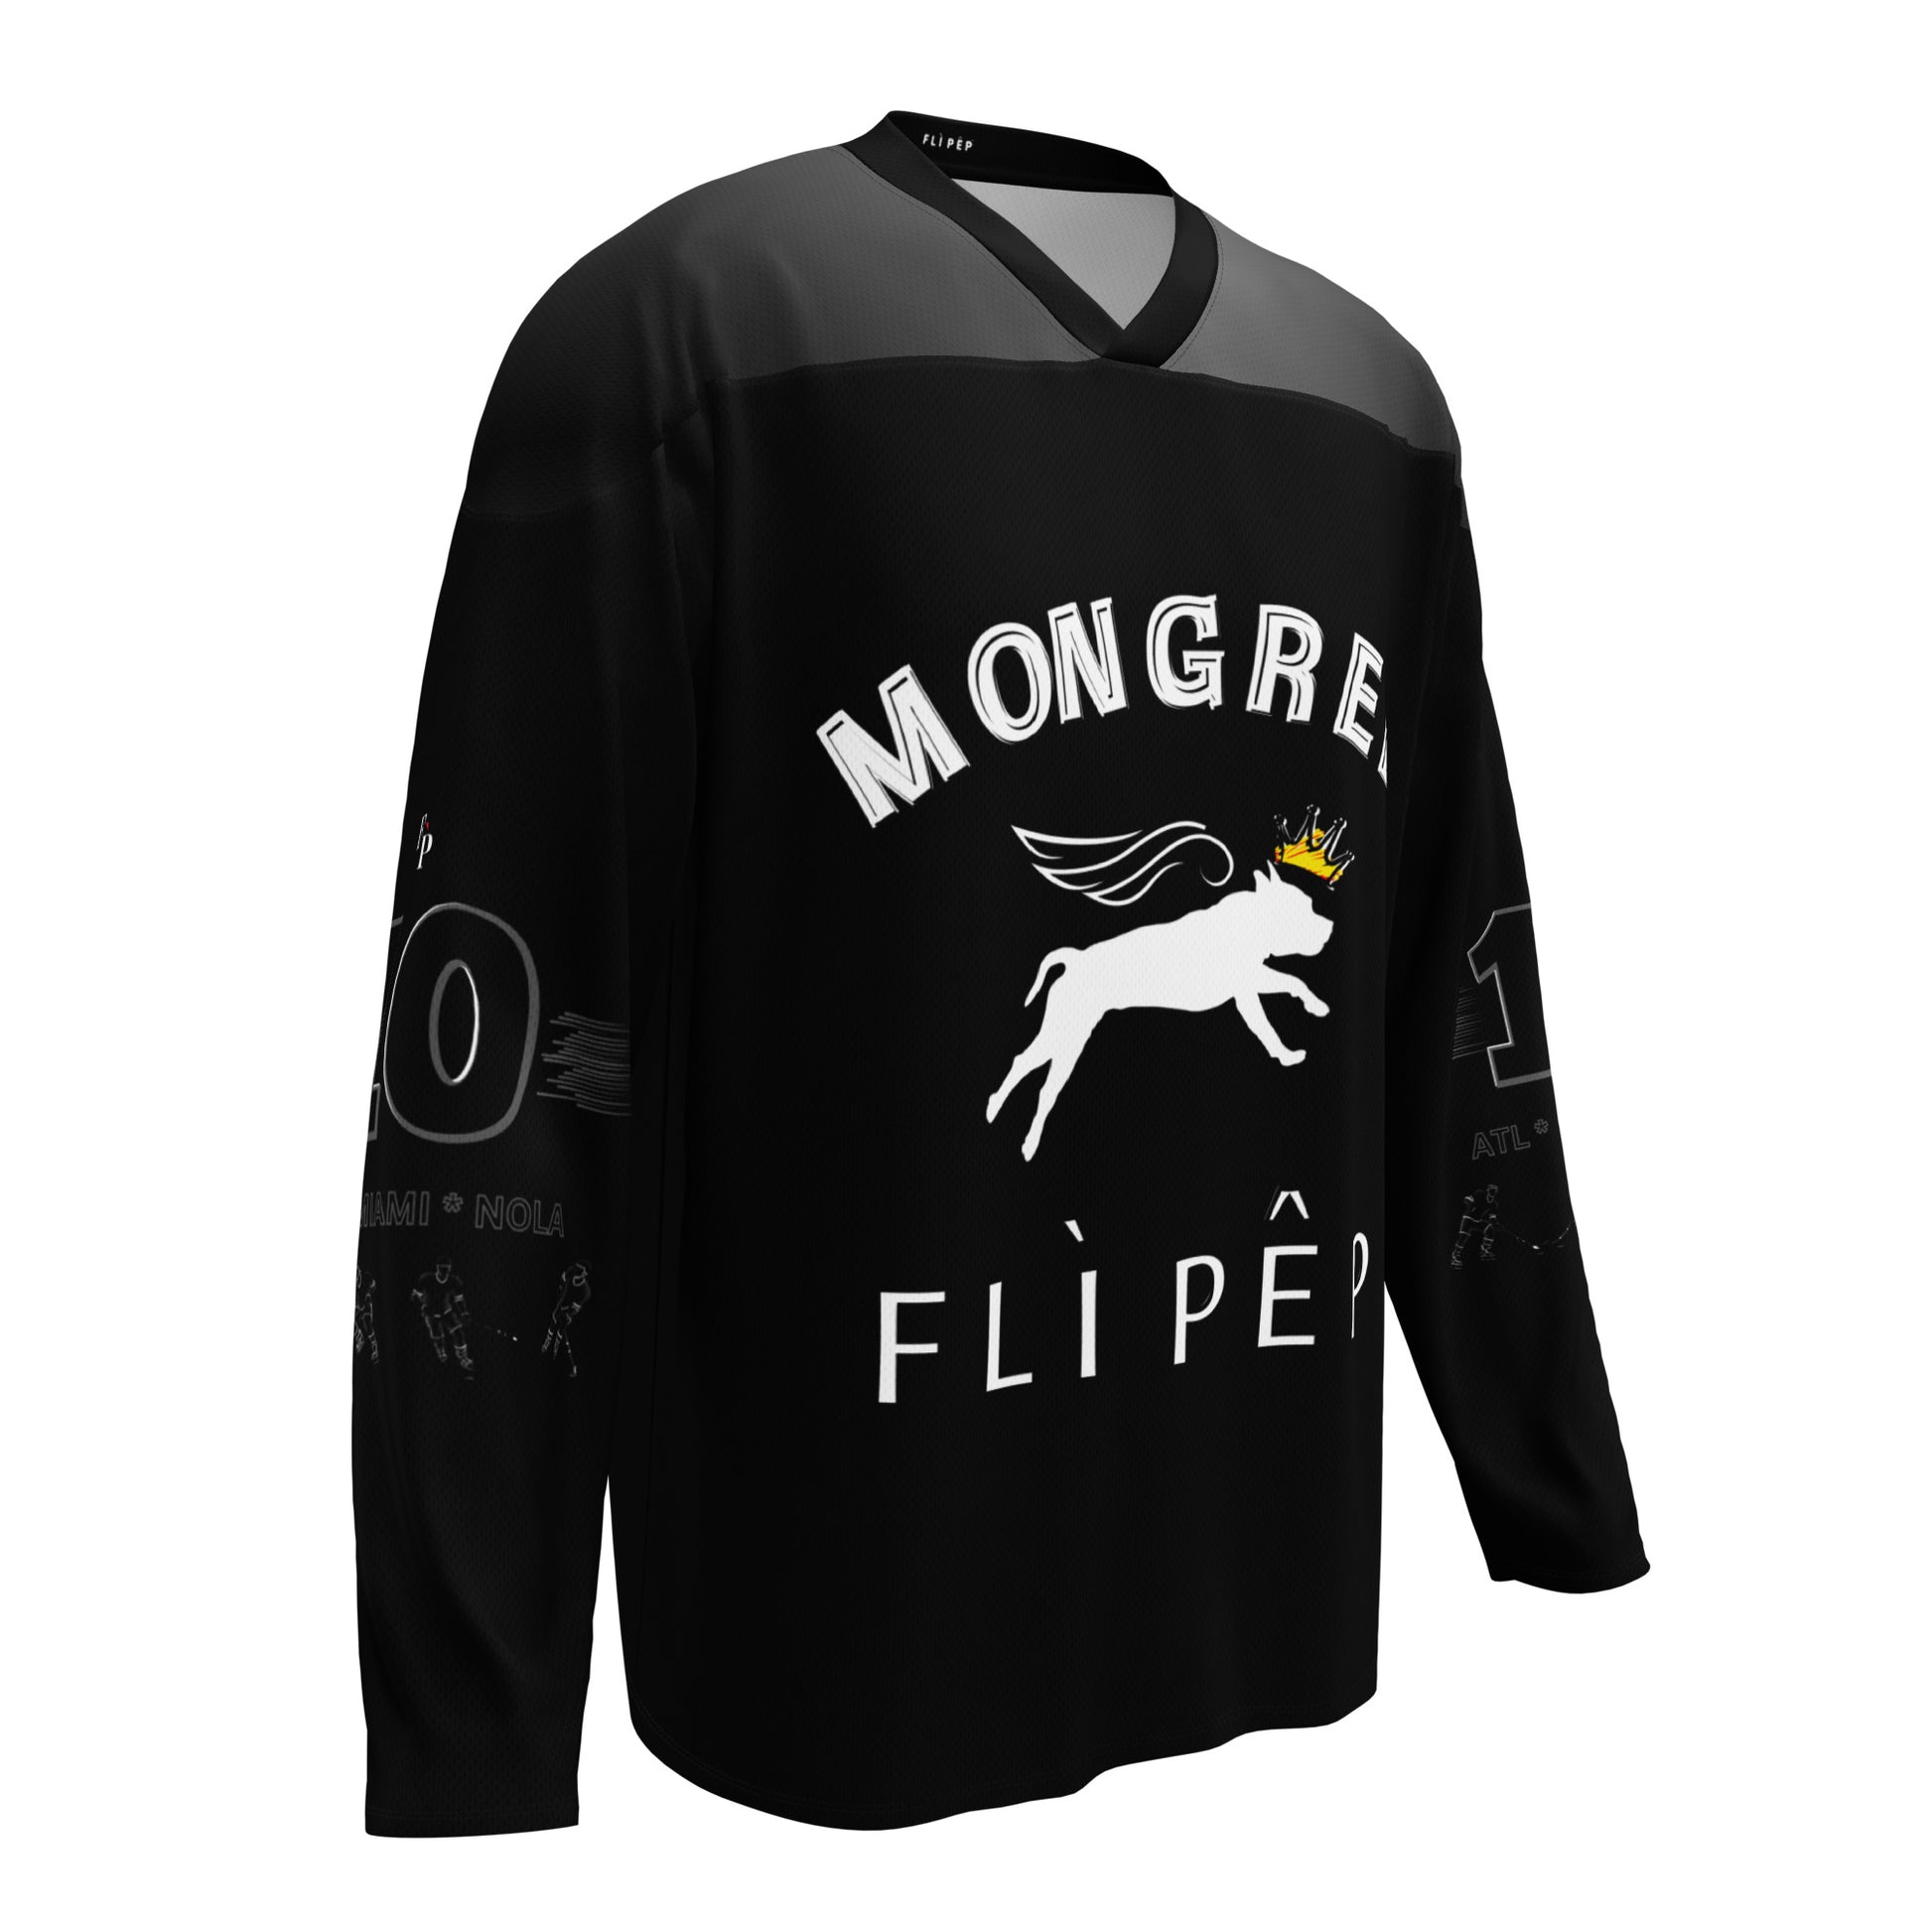 Mongrel Relaxed Fit Recycled Hockey Fan Jersey - FLÌ PÊP™